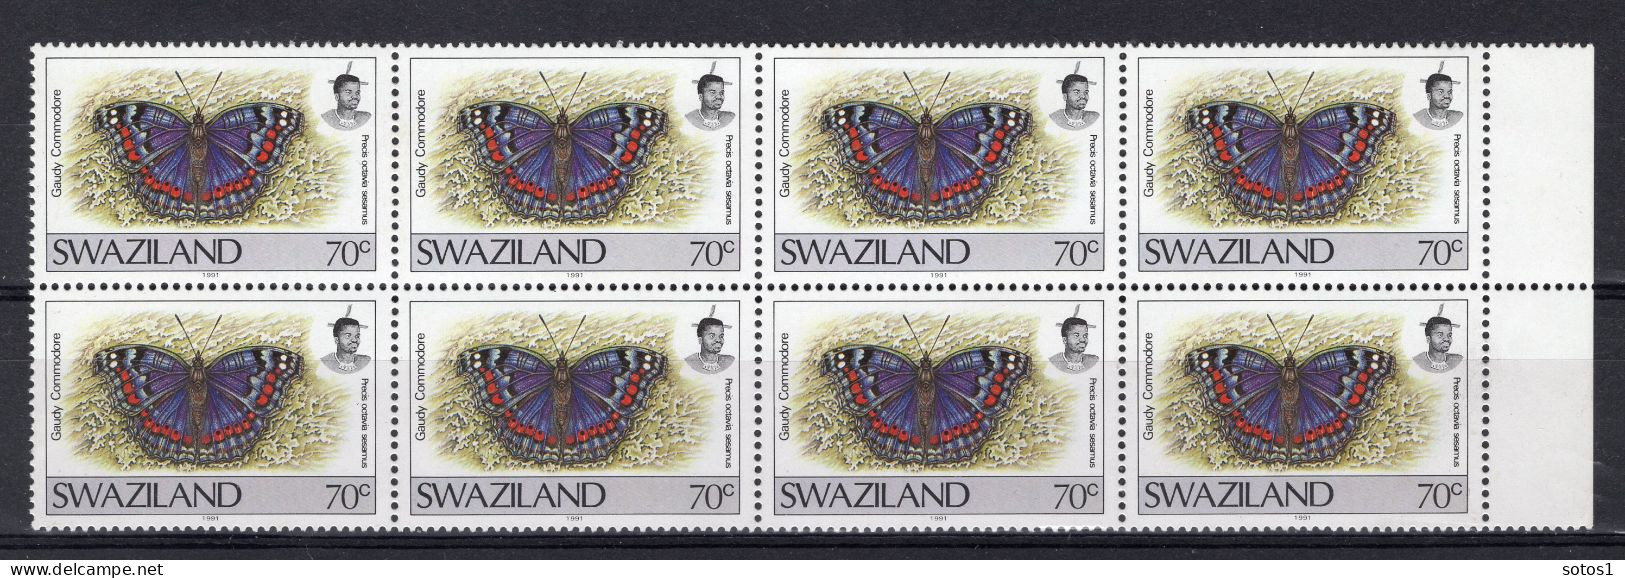 SWAZILAND Yt. 521 MNH  8 Stuks 1987 - Swaziland (1968-...)